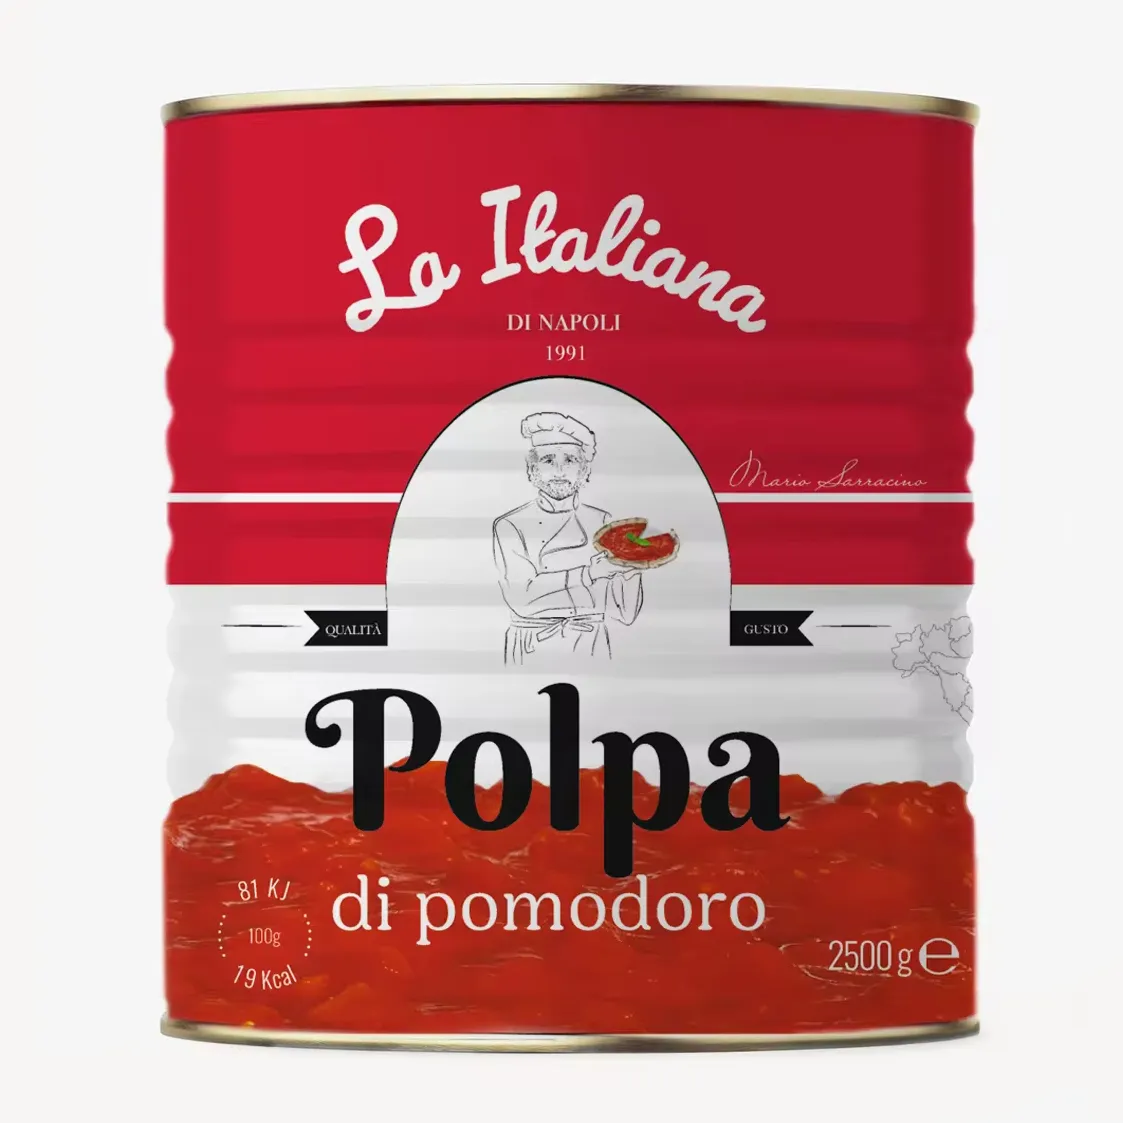 Comida enlatada de tomate fresco italiano de alta calidad 400g estilo de tomate picado de lata